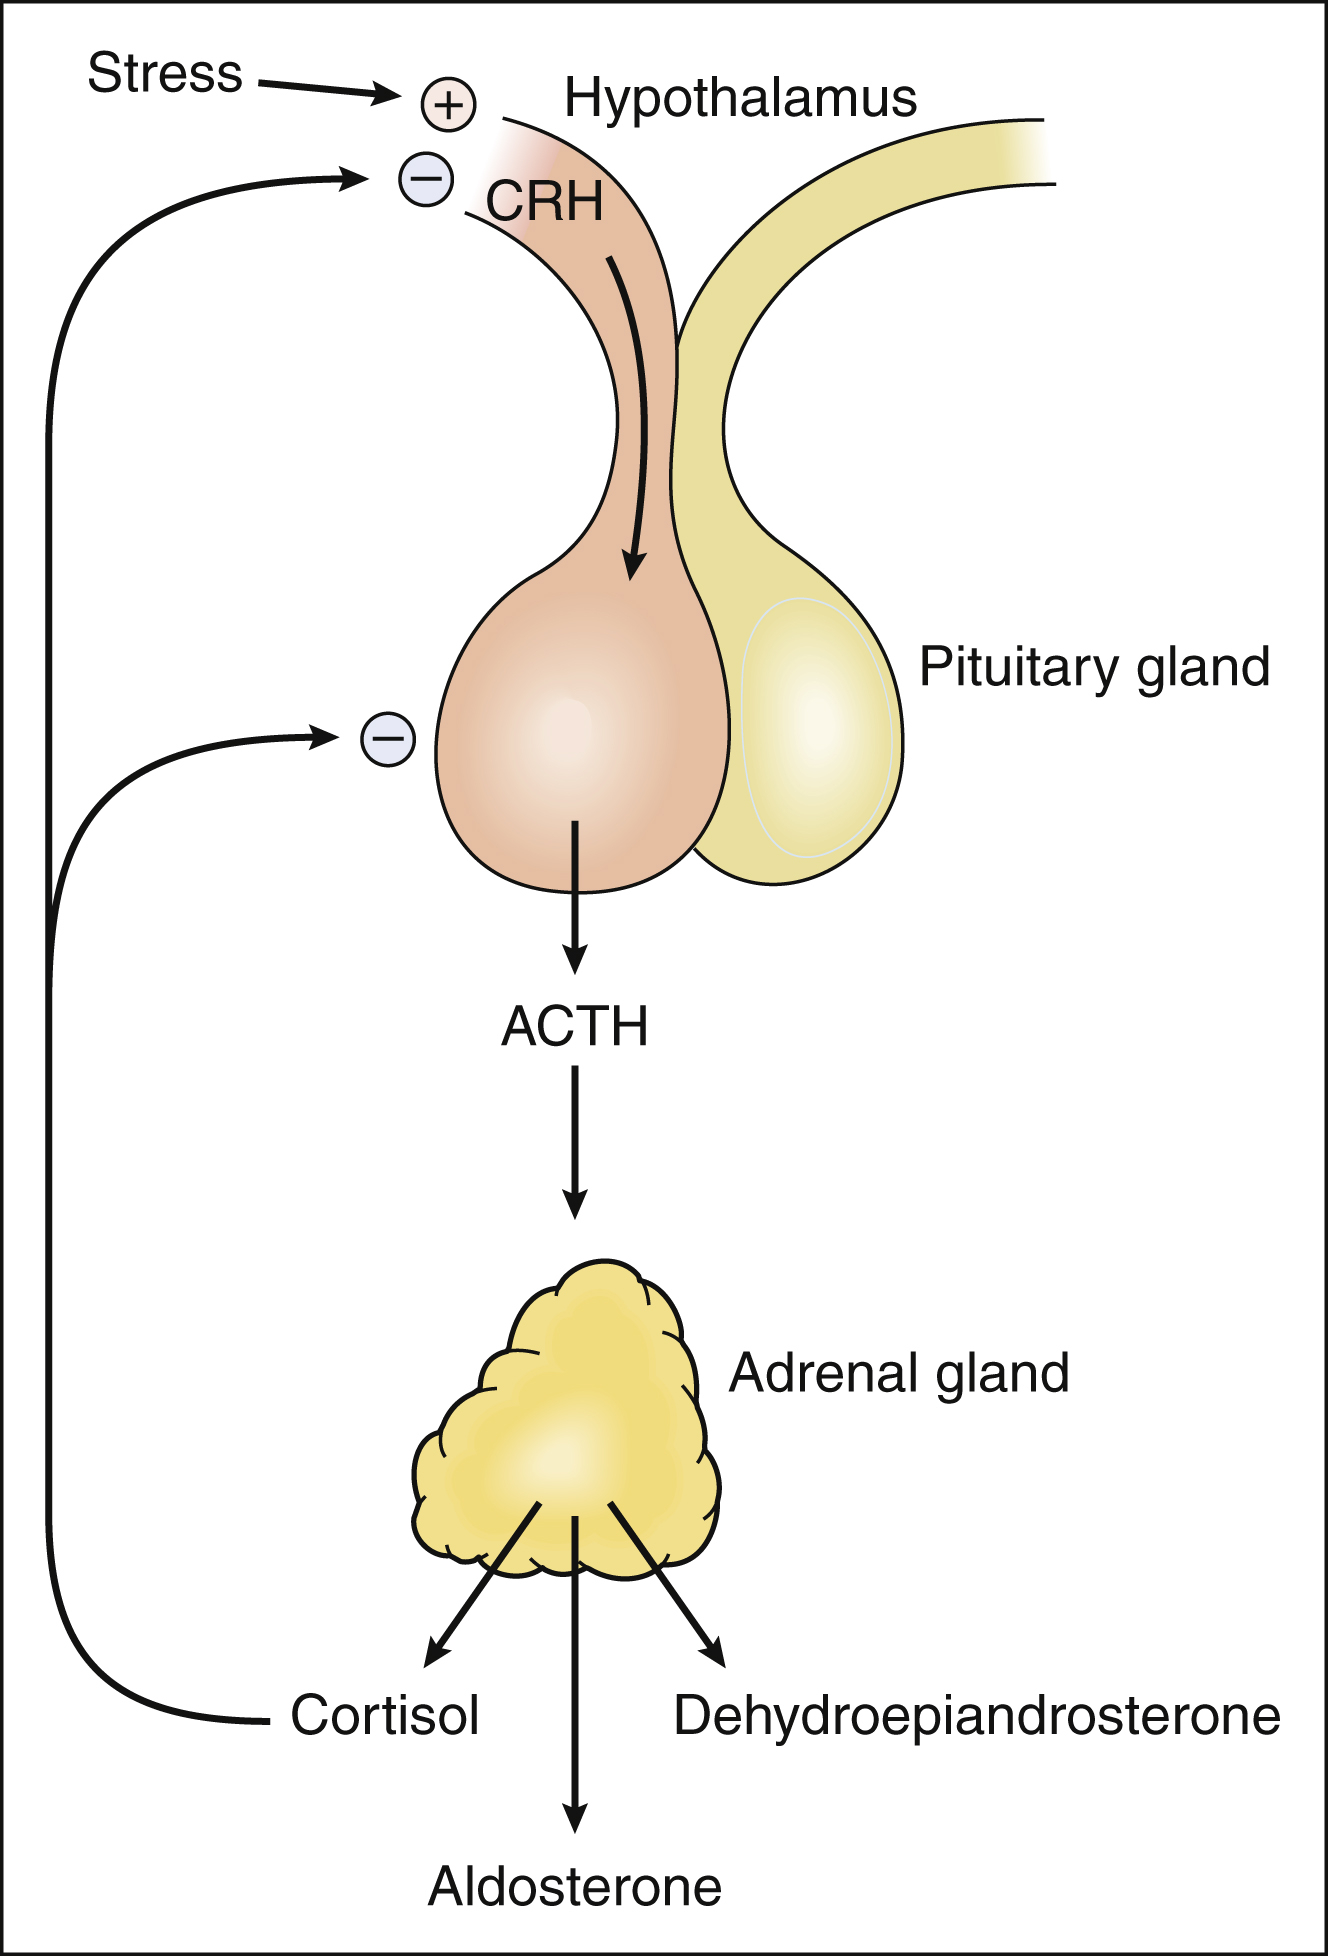 what hormones does the adrenal gland secrete